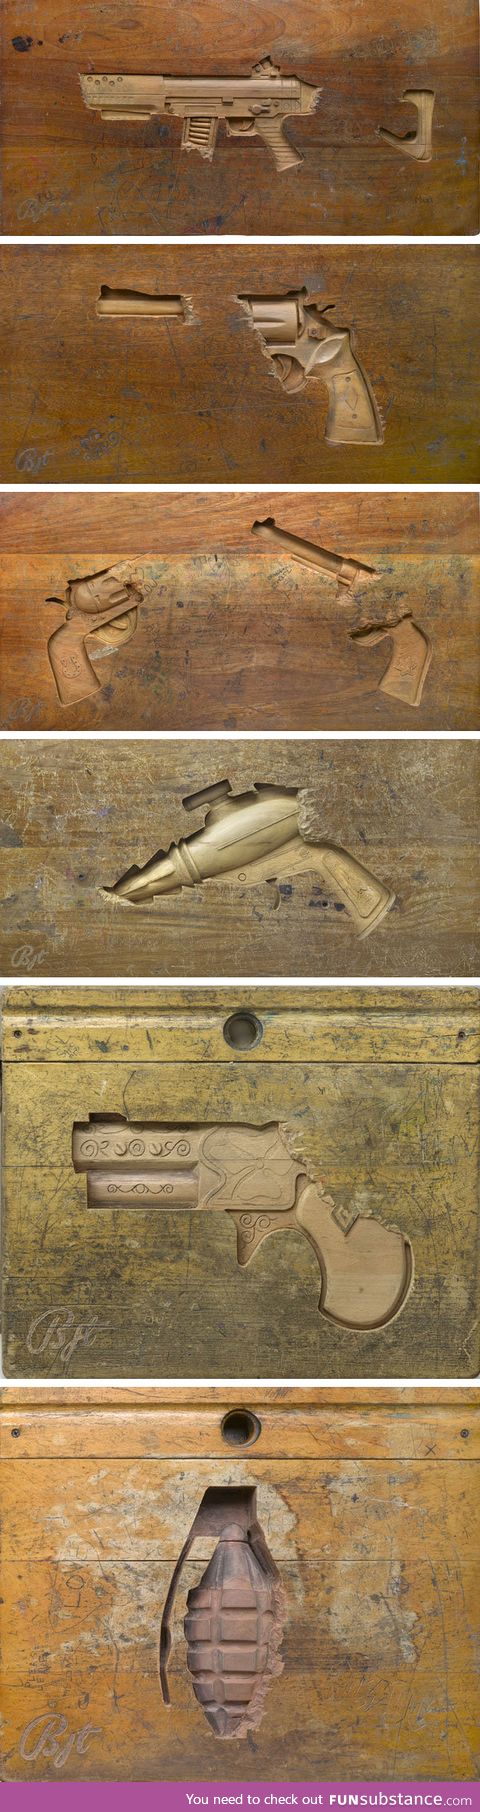 Guns carved into wooden school desks